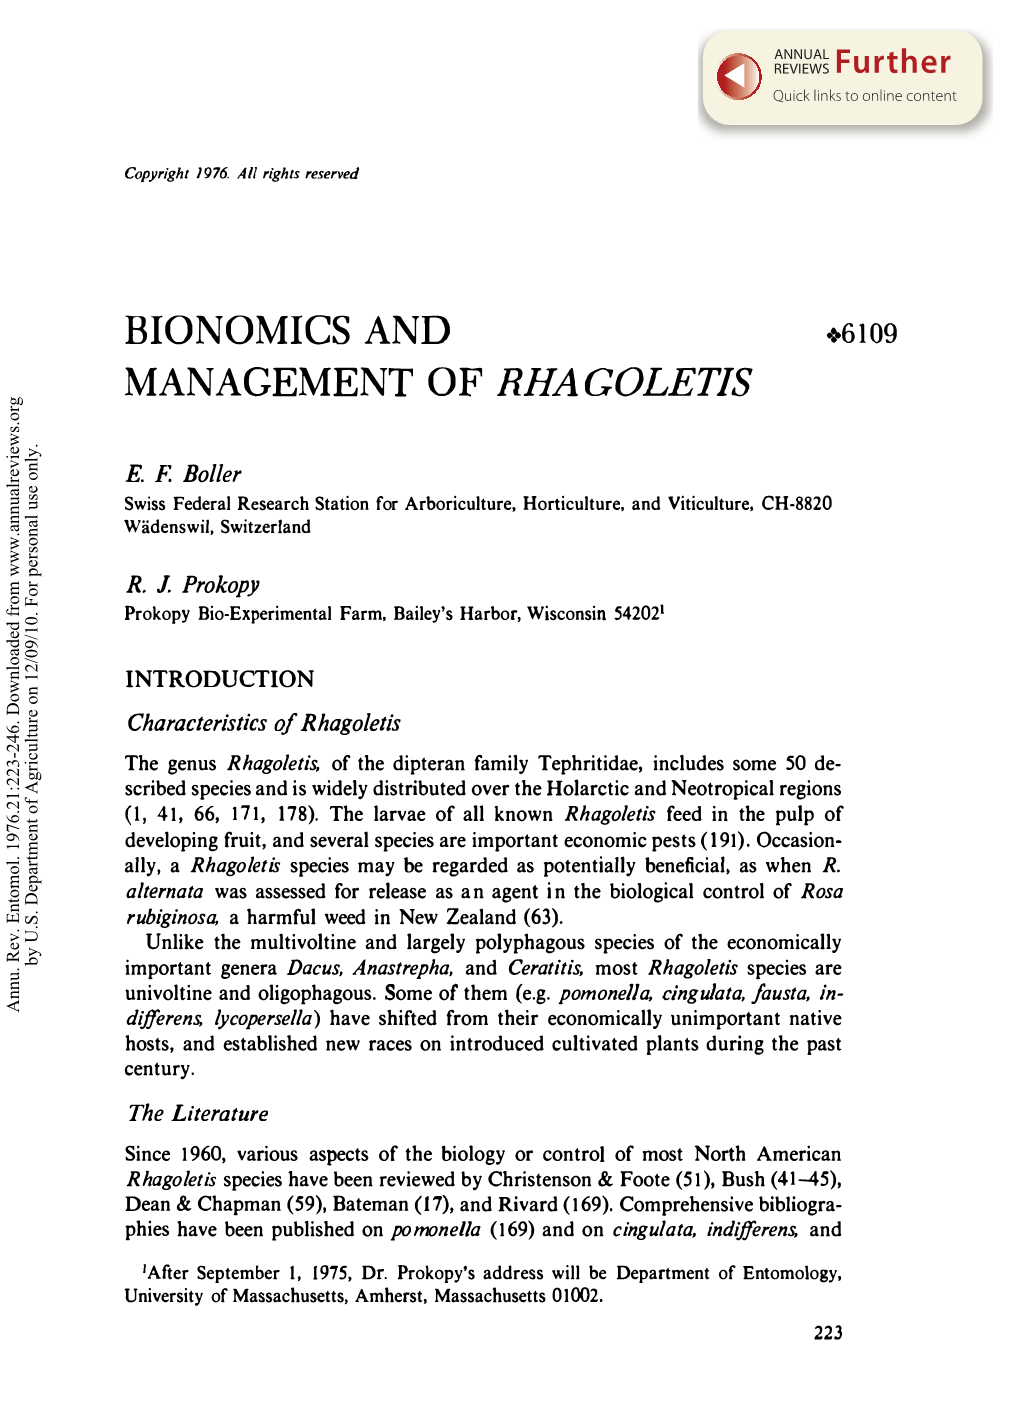 Bionomics and Management of Rhagoletis 225